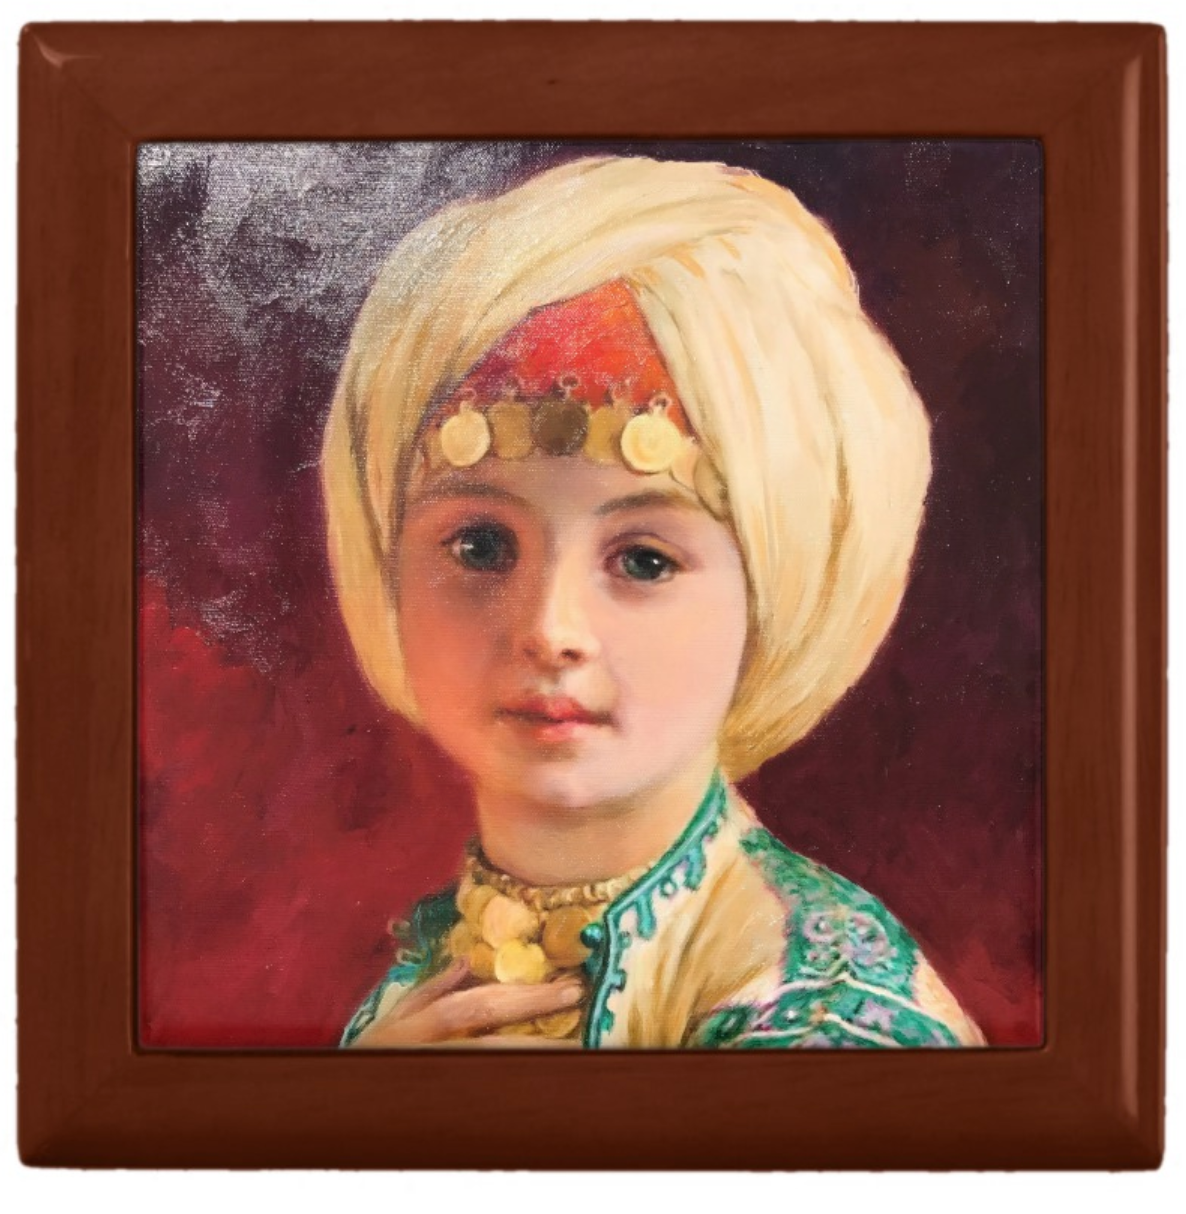 Keepsake/Jewelry Box - Carl Haag Child with Turban - Lacquer Box Golden Oak Box